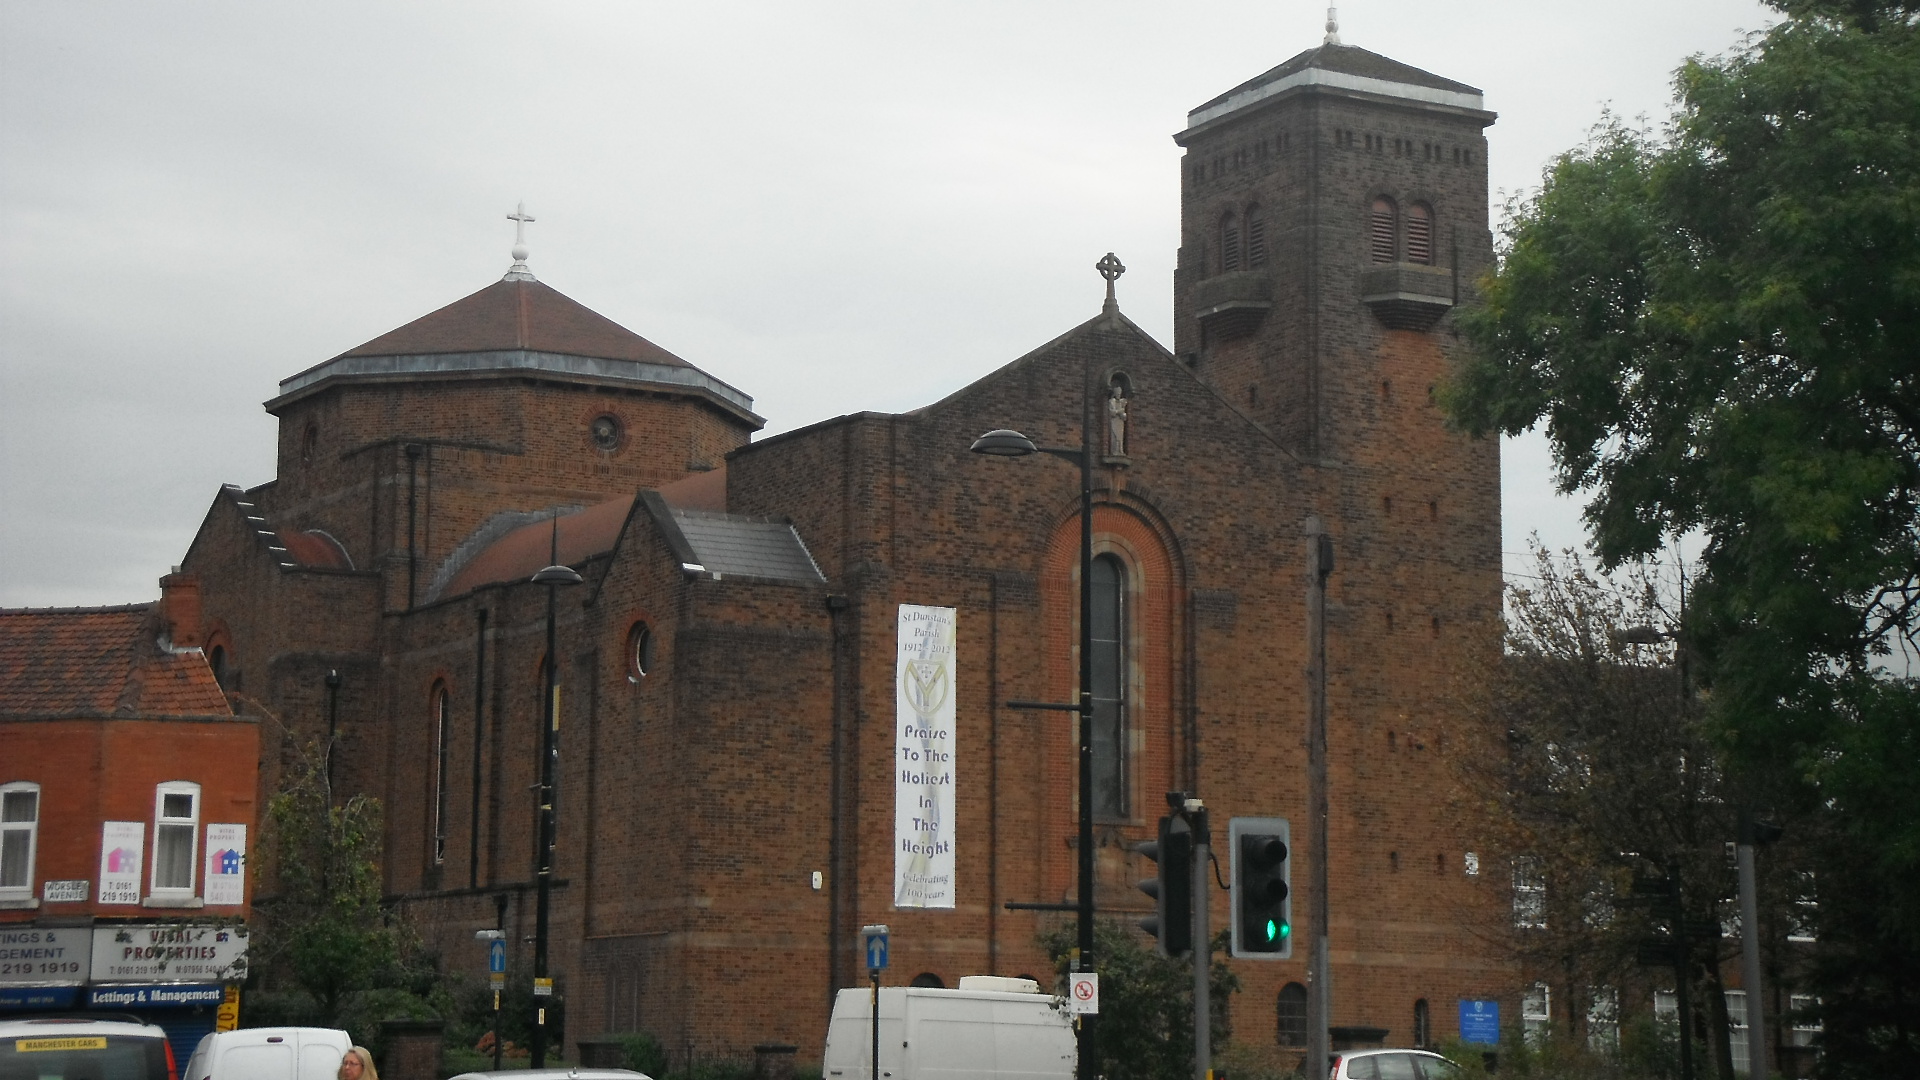 Photo taken by me - St Dunstan's Church - Moton Manchester